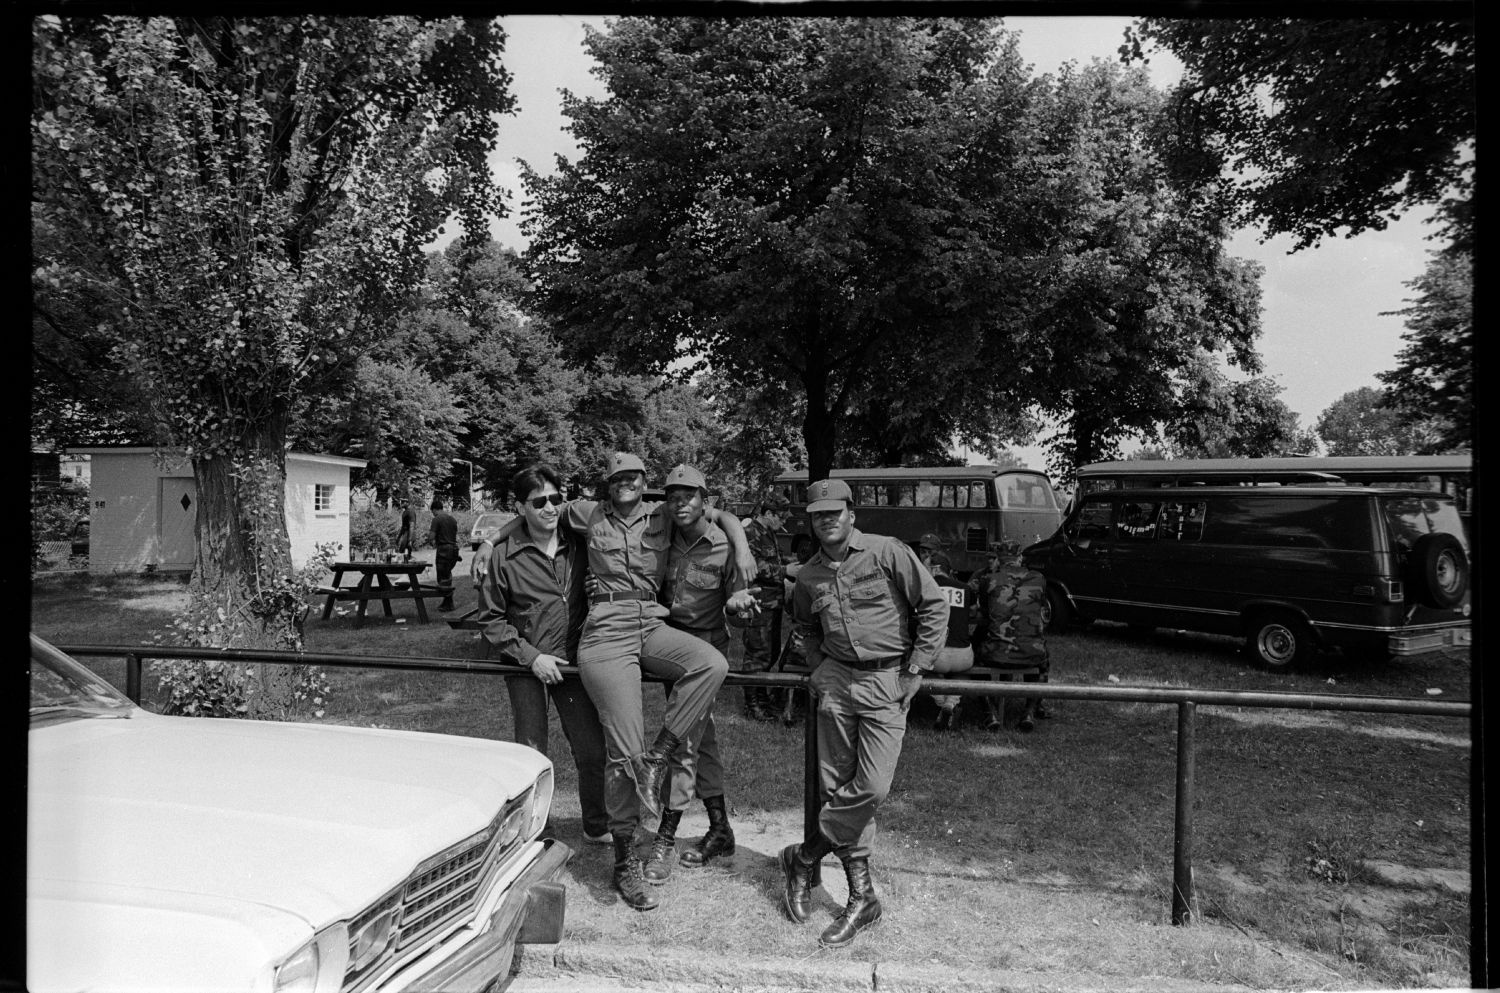 S/w-Fotografie: Sportveranstaltung der U.S. Army Berlin Brigade in den Andrews Barracks in Berlin-Lichterfelde